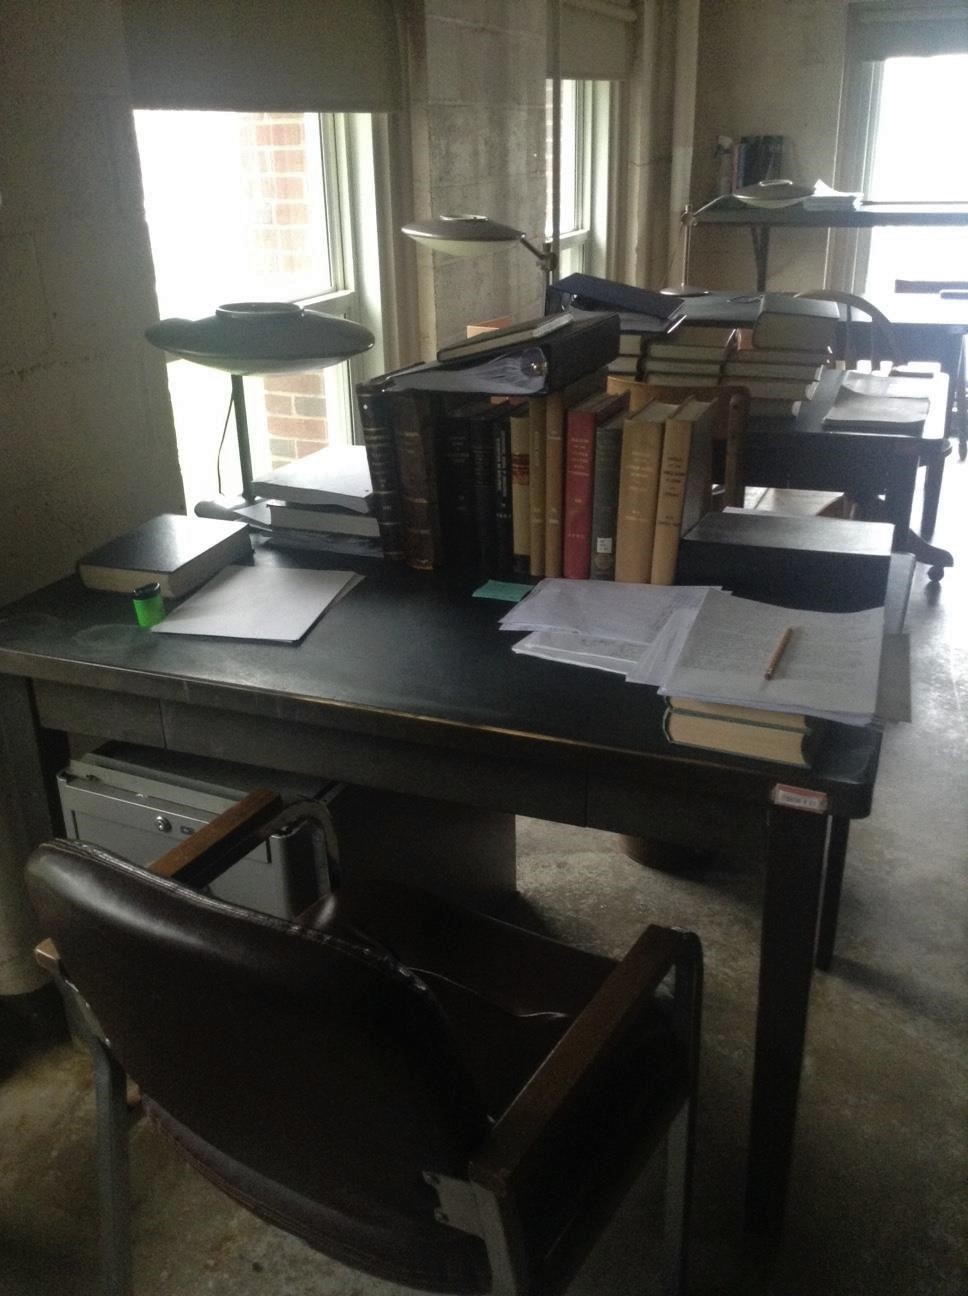 Photo of MBL Lillie Library's rental desks